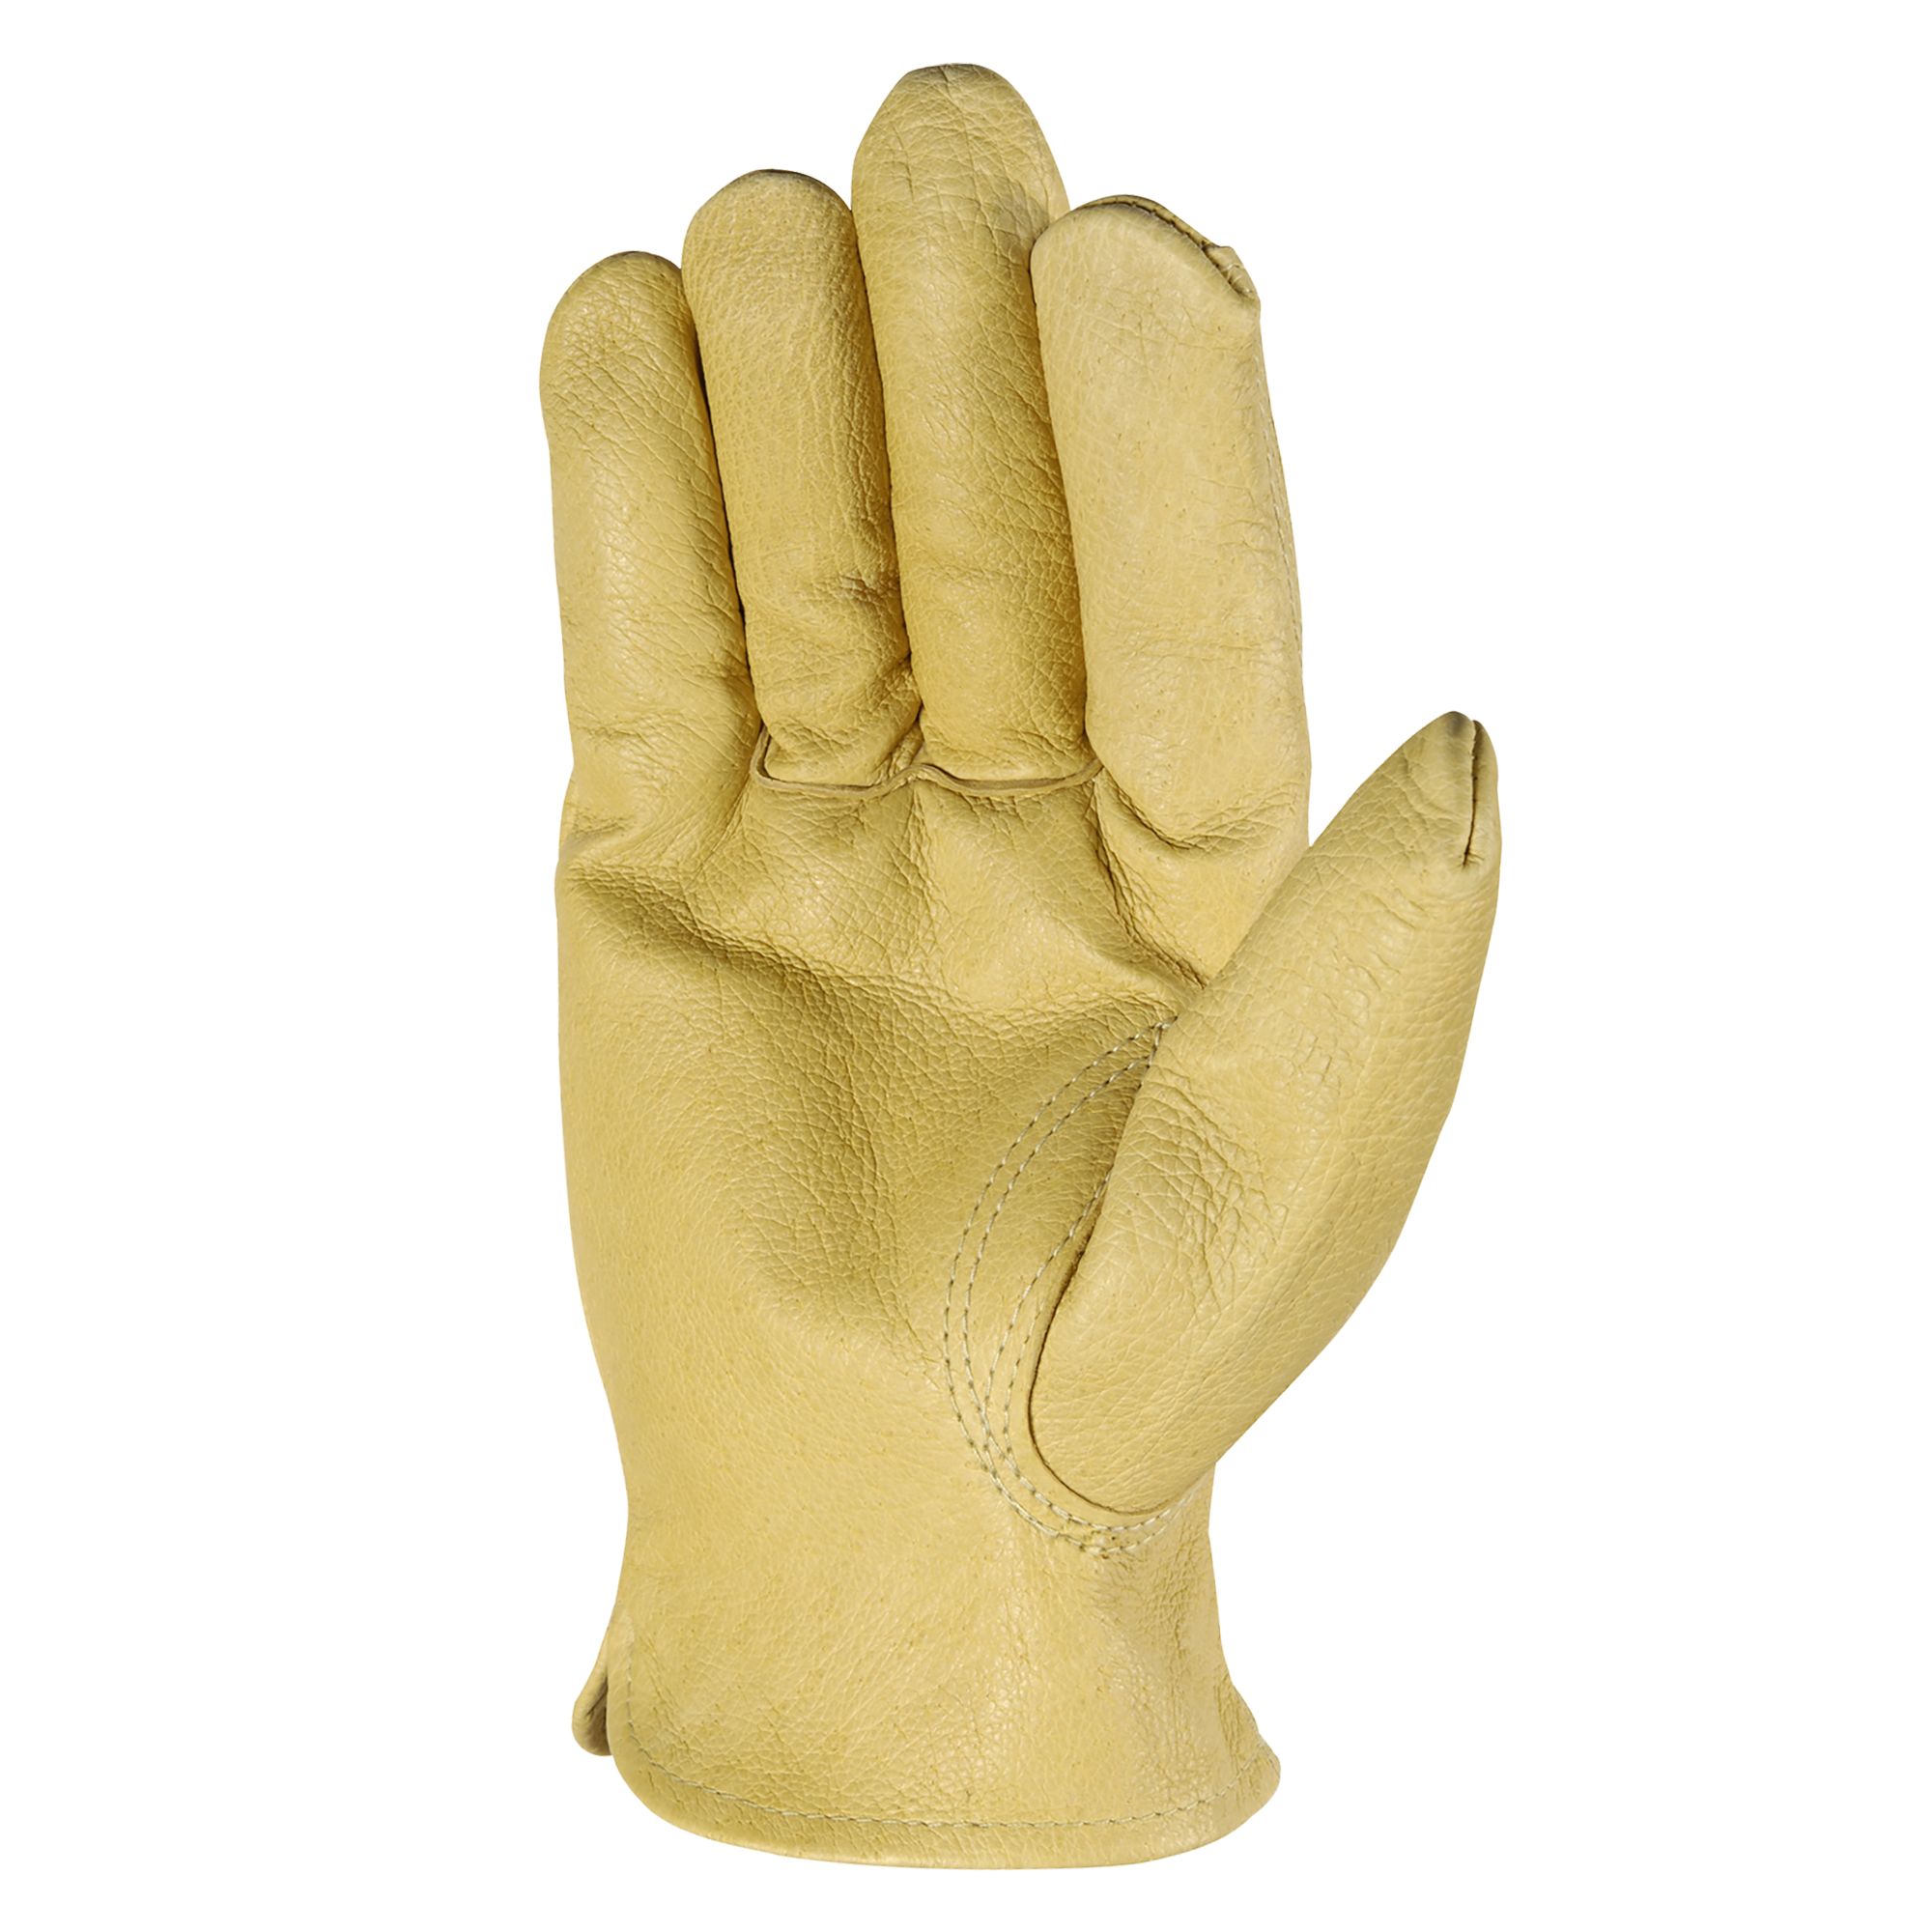 Wells Lamont 1133XL Work Gloves, Men's, XL, Slip-On Cuff, Cowhide Leather, Gold/Yellow - 2